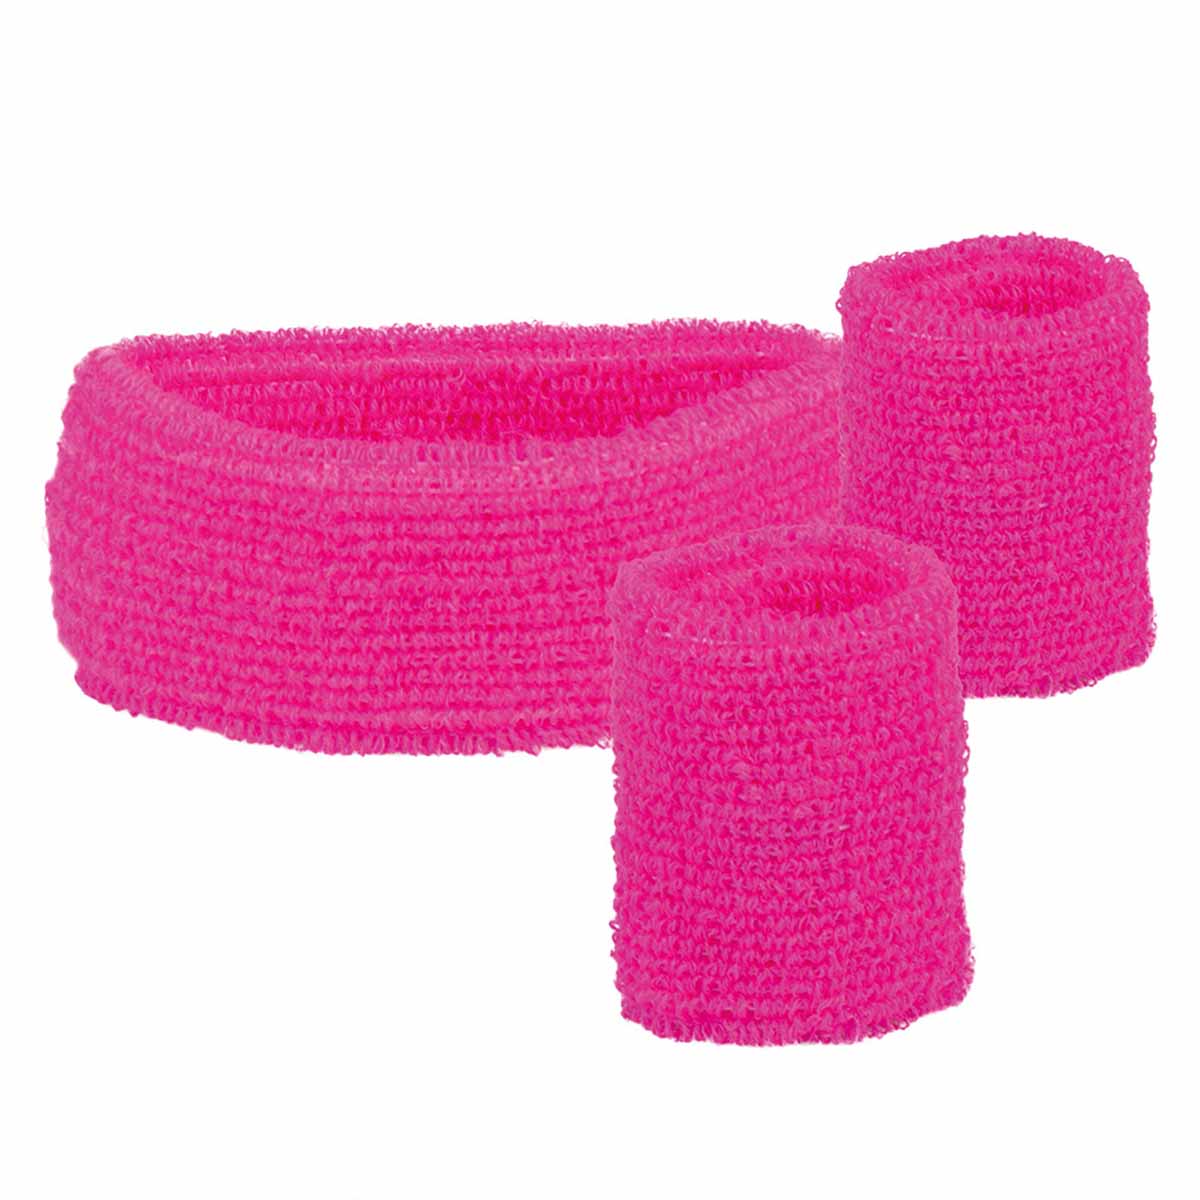 Svettband kit, rosaproduktzoombild #1